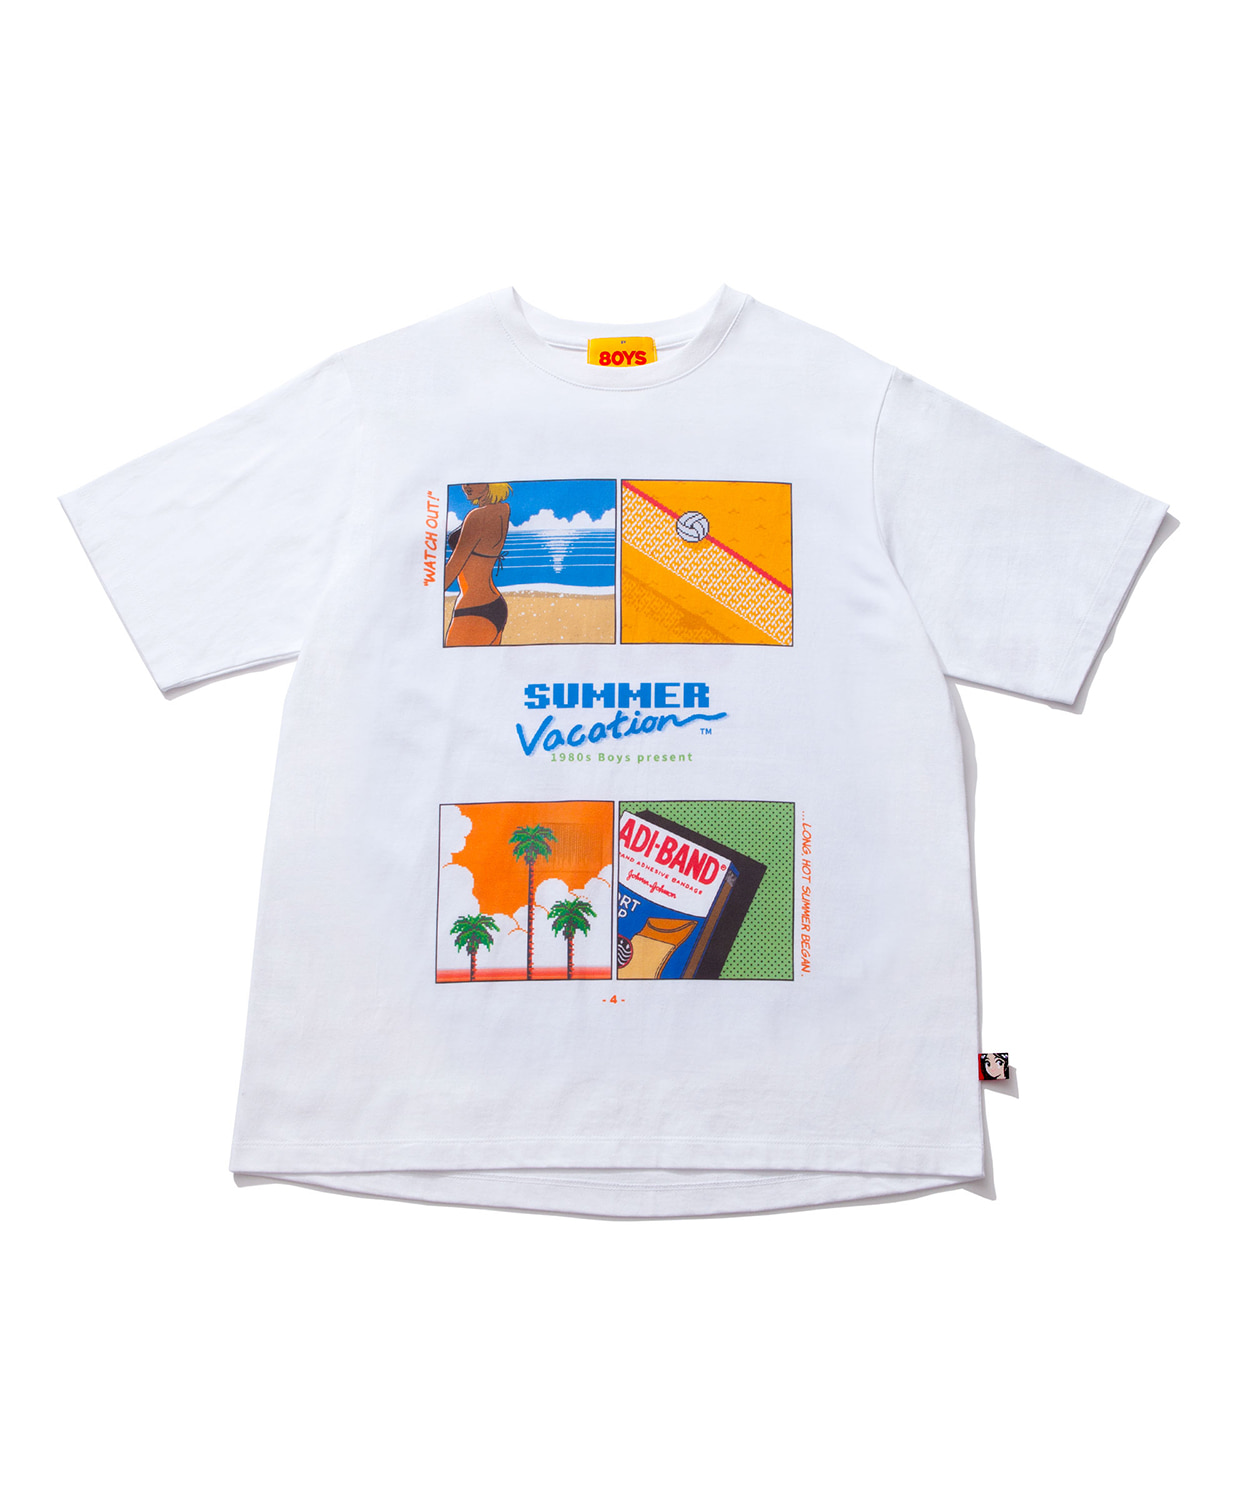 Q CUMBERS큐컴버스 [80YS] Summer Vacation_4(비키니) 티셔츠